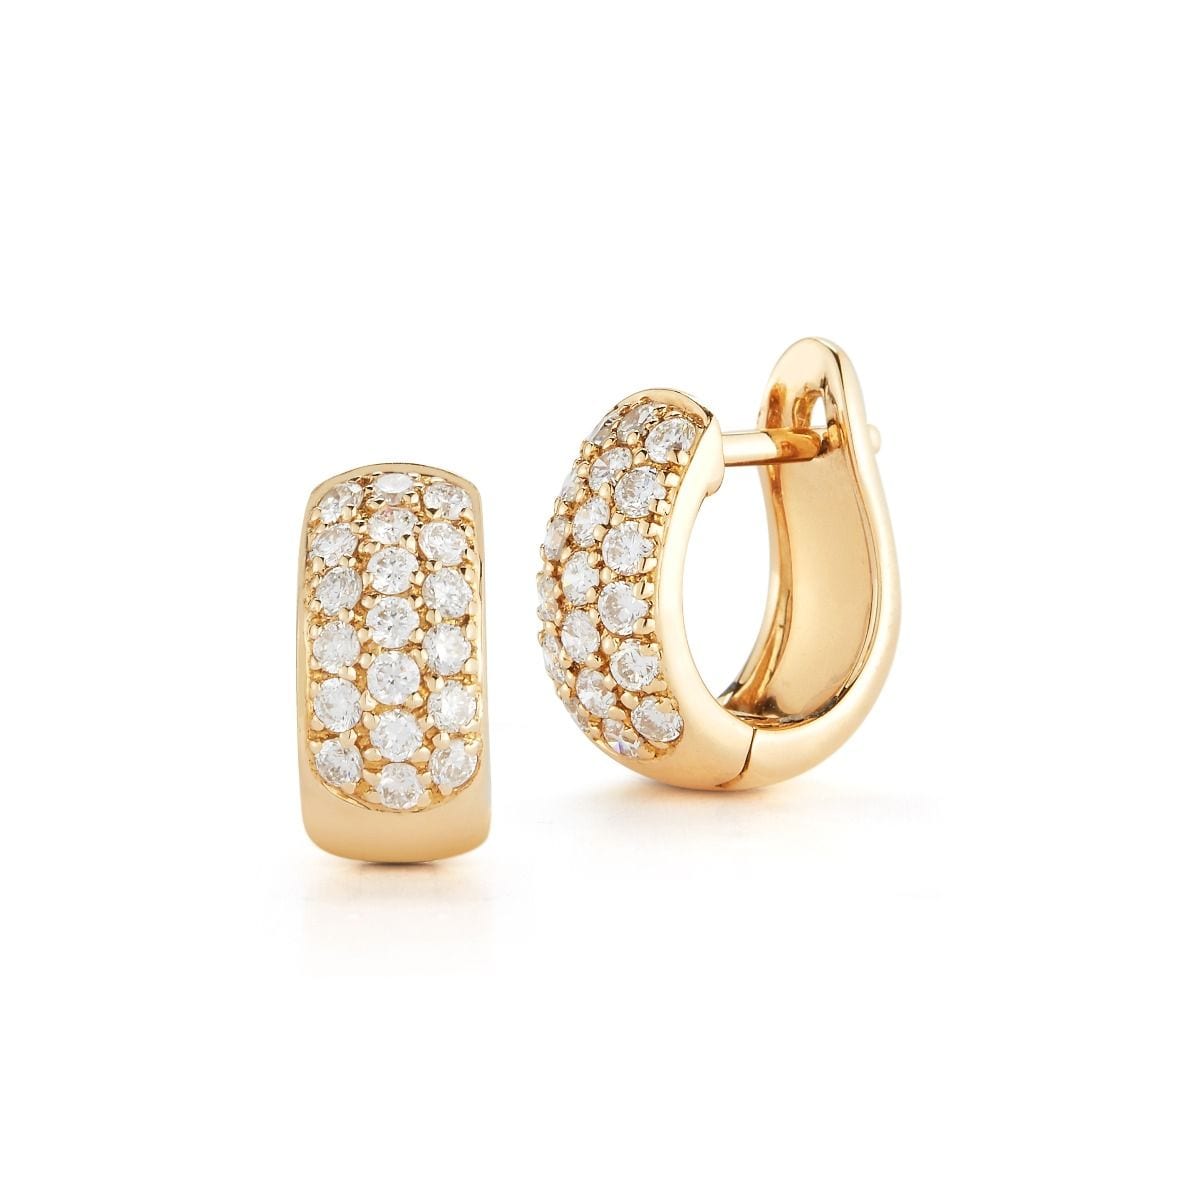 Dana Rebecca Designs 14kt yellow gold mini huggie diamond earrings